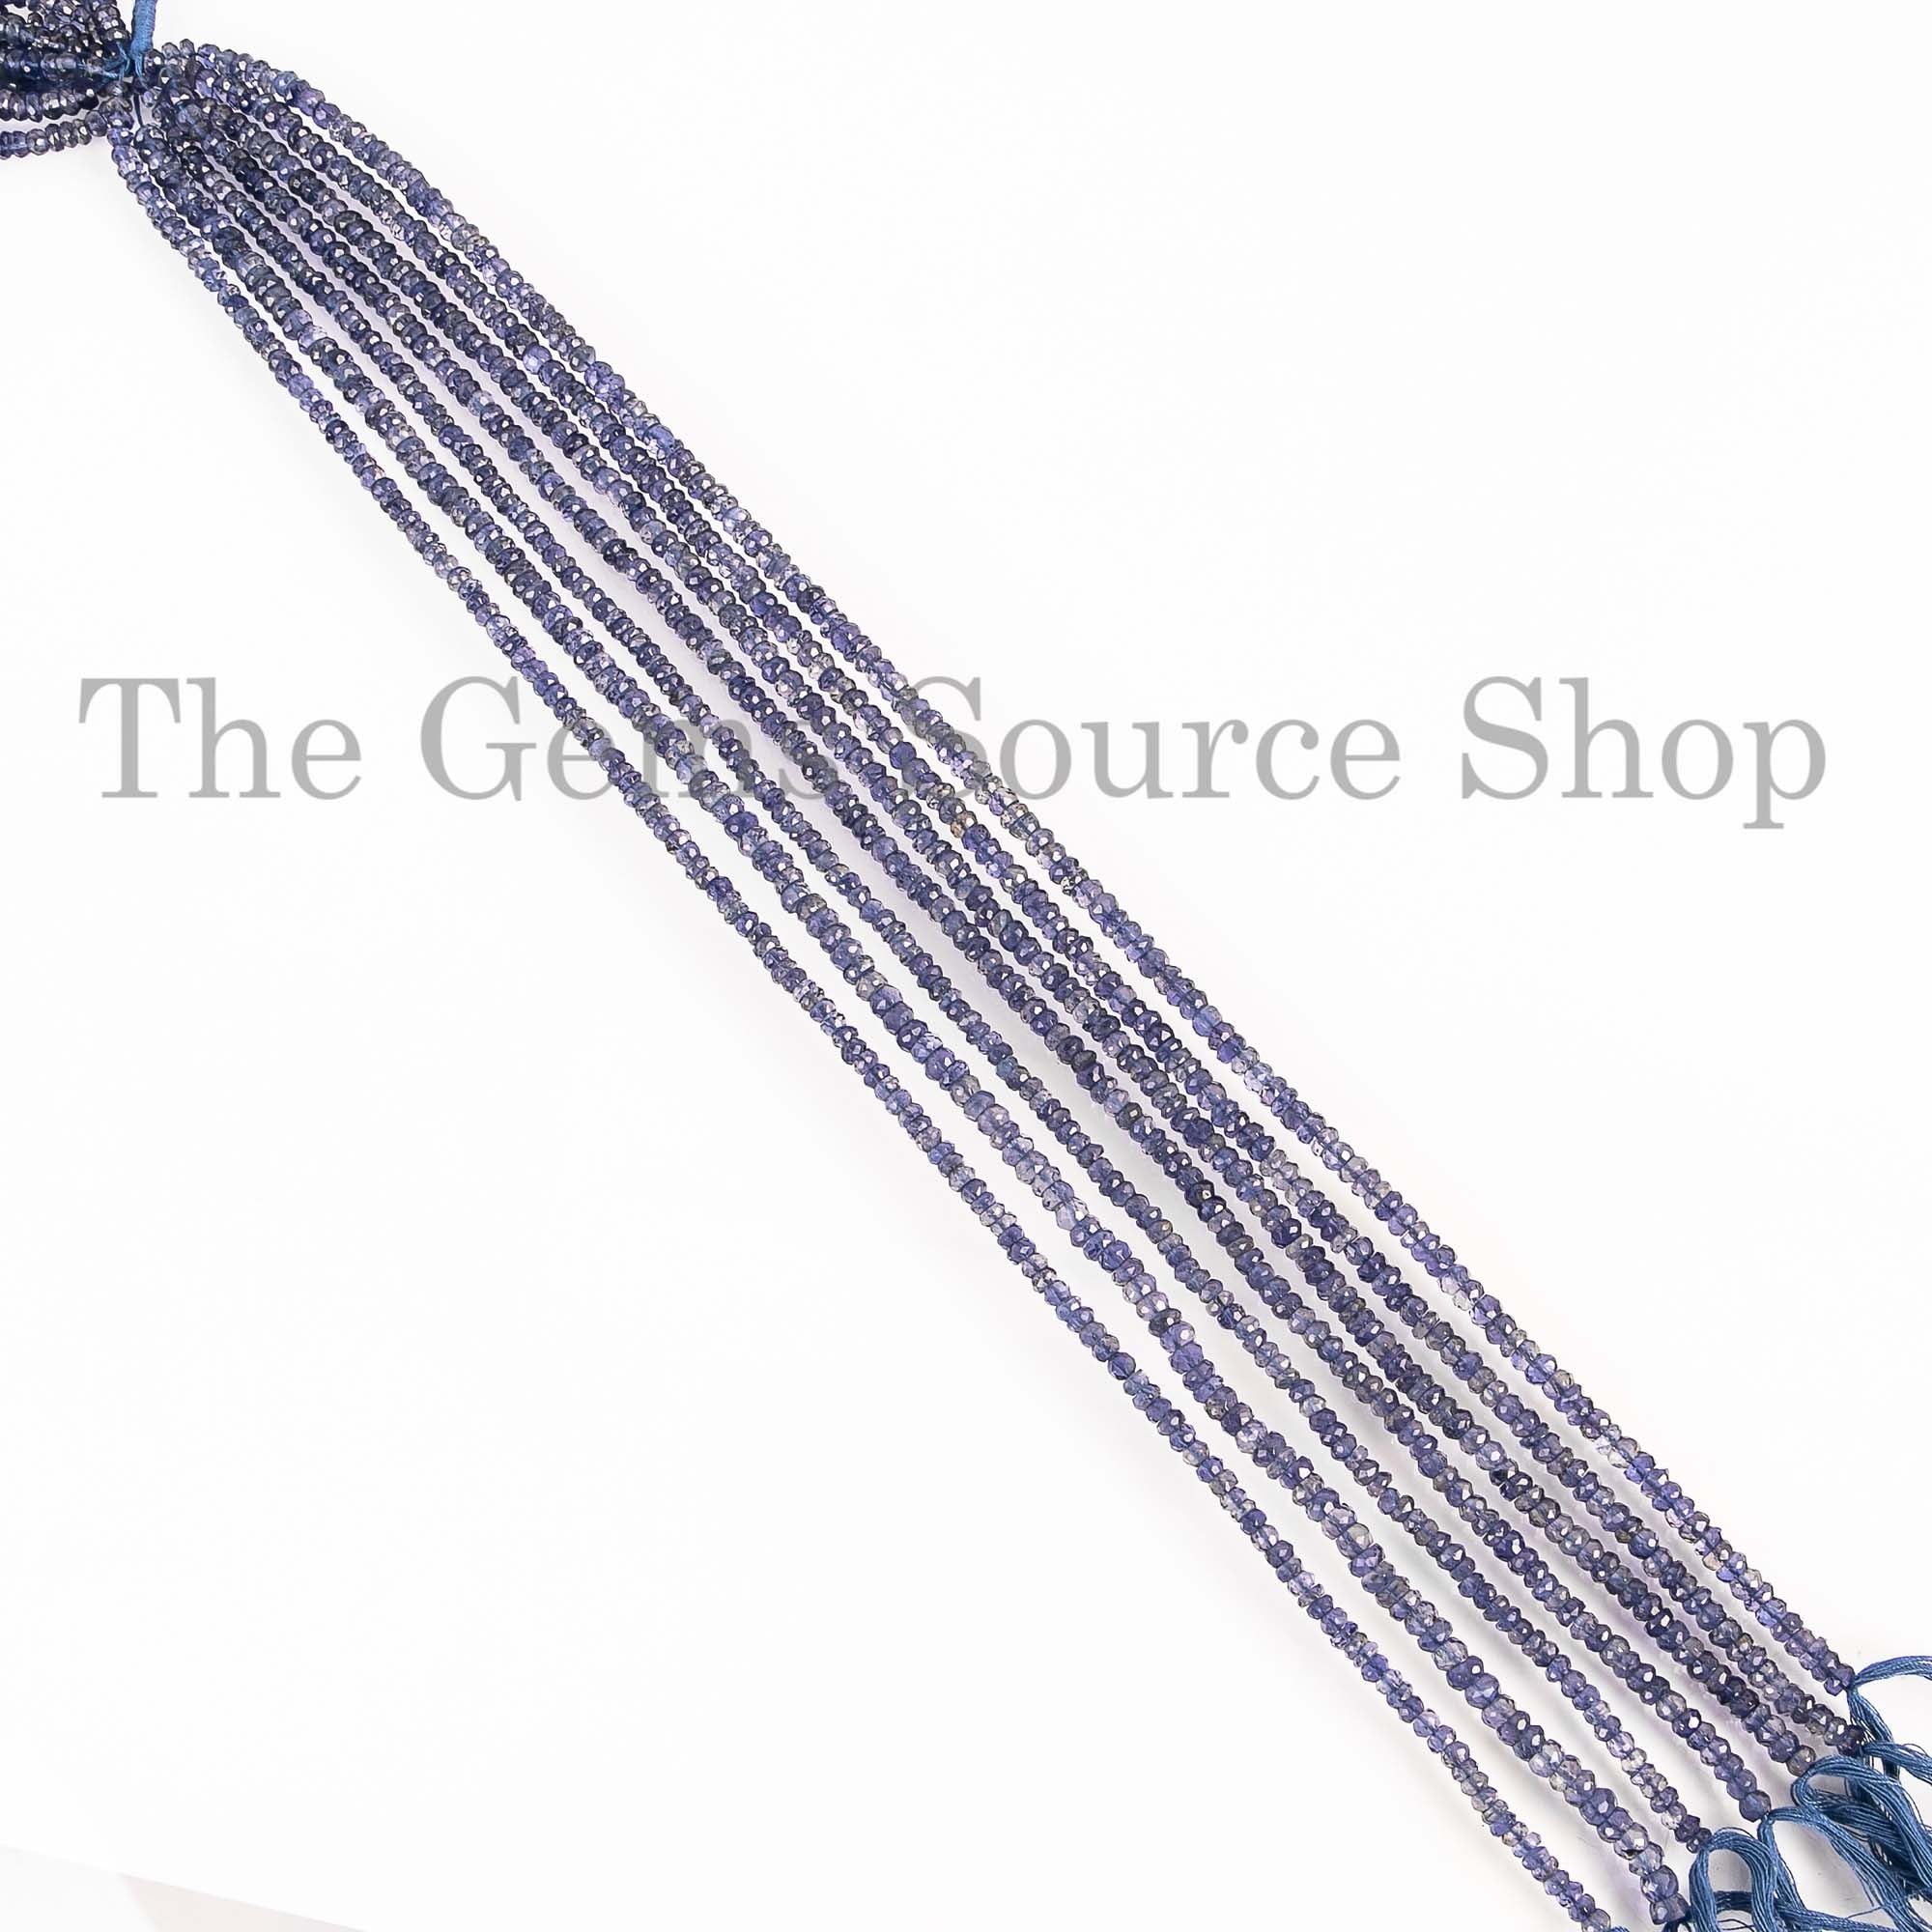 Iolite 4-4.5mm Rondelle Beads, Iolite Rondelle Beads , Iolite Faceted Beads, Iolite Beads, Iolite Gemstone Beads